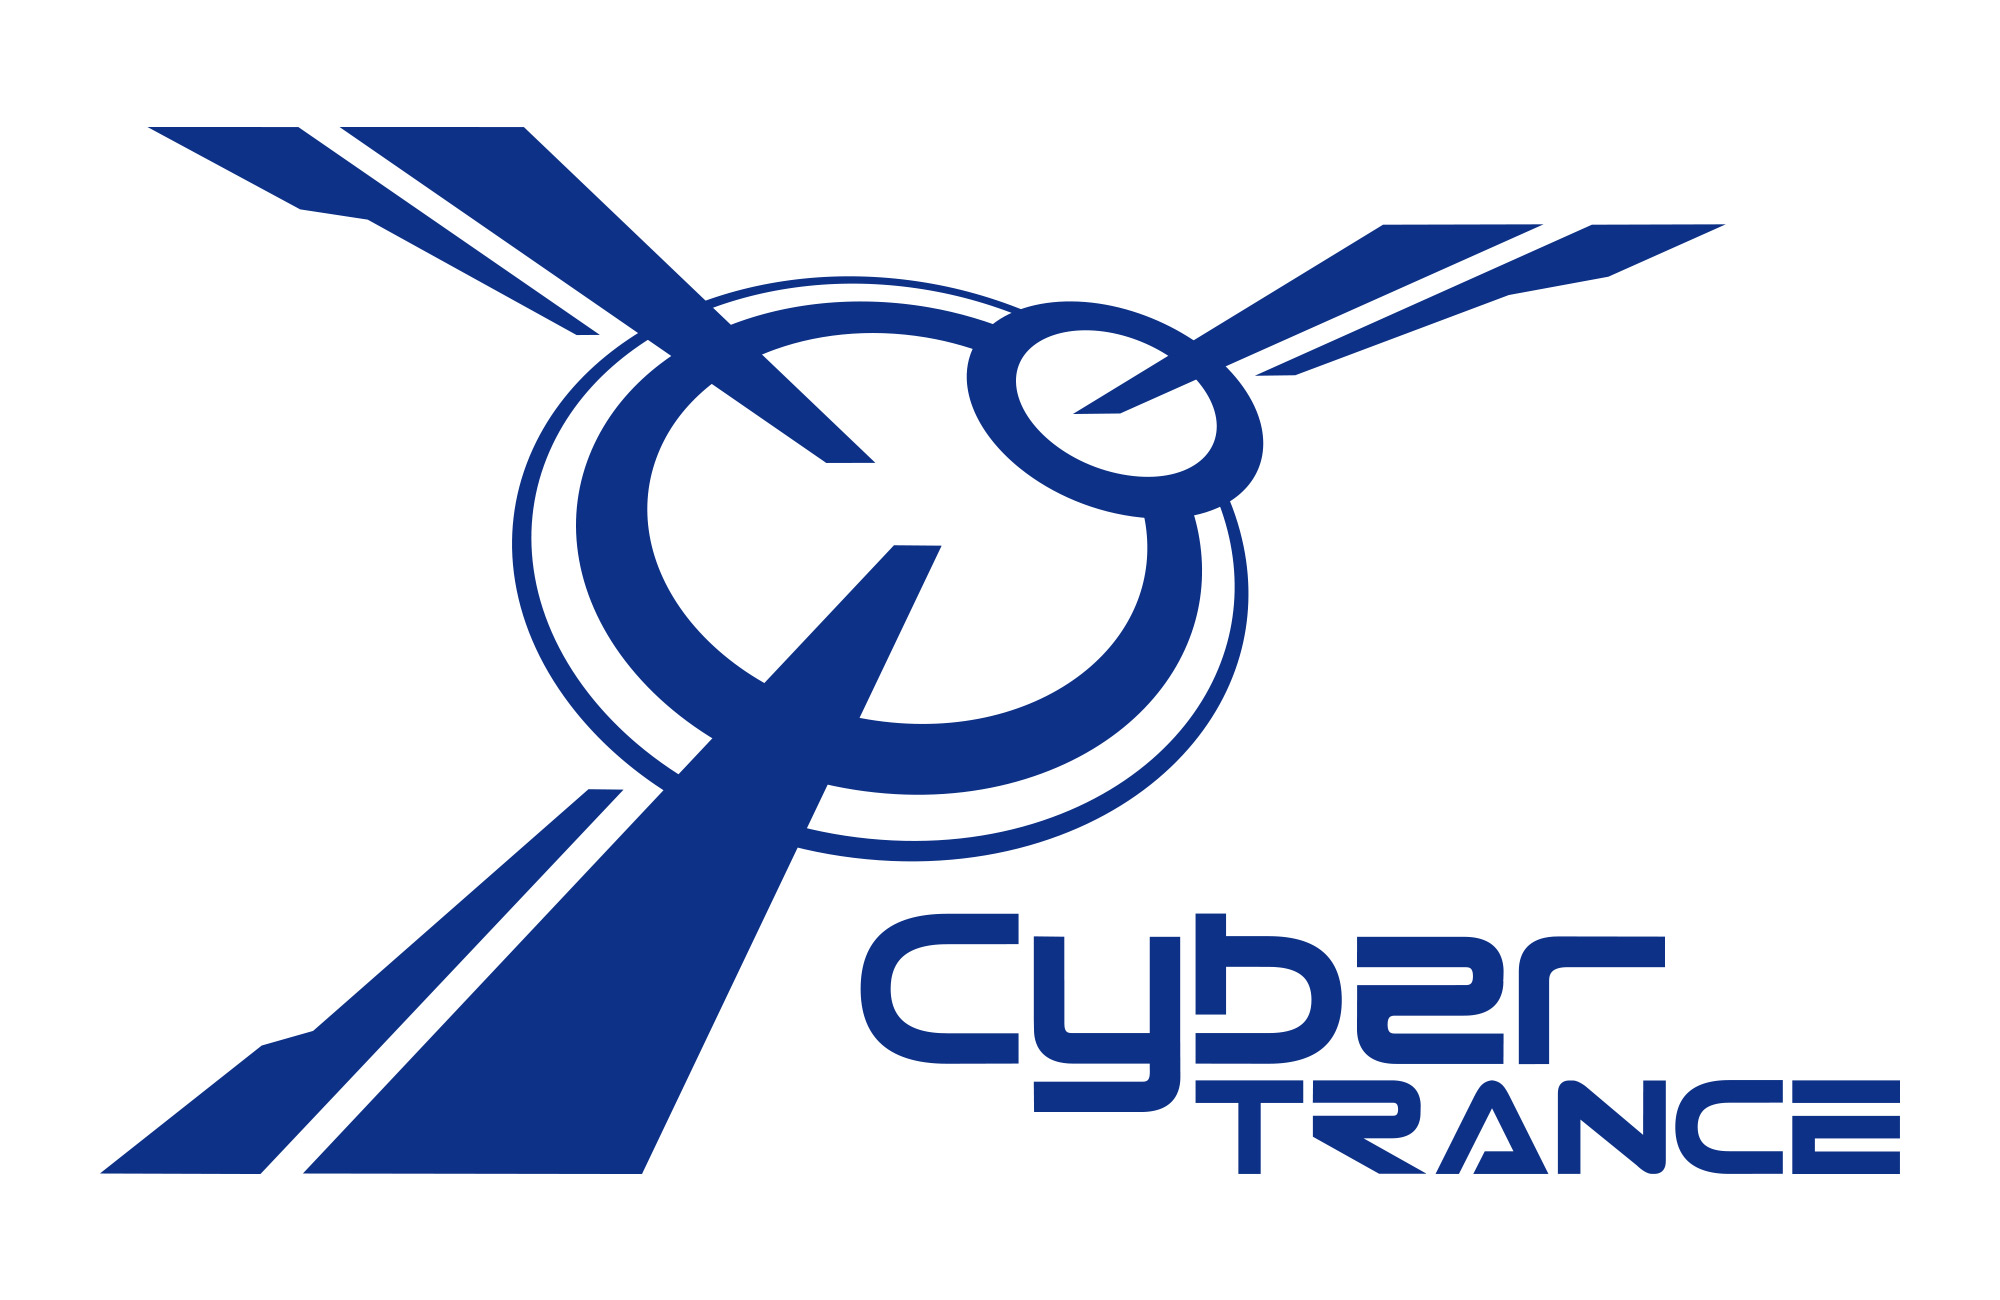 The Cyber TRANCE Logo